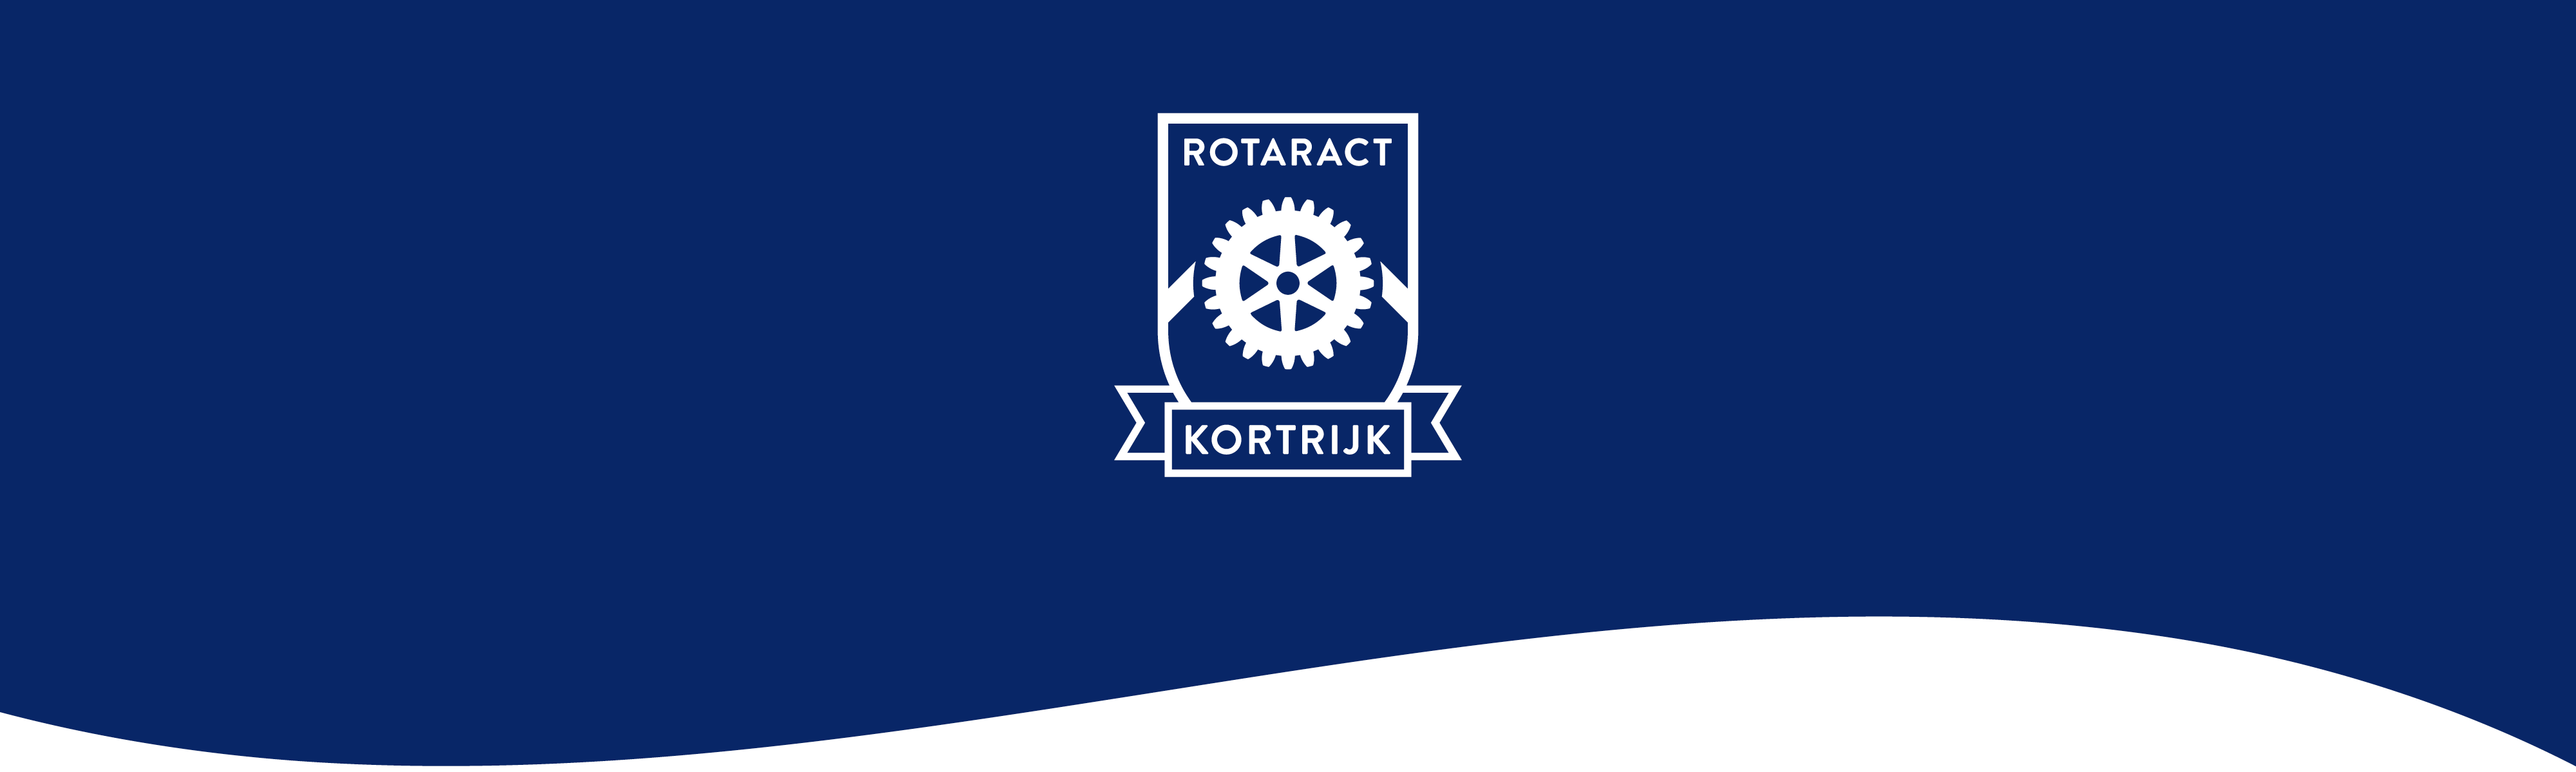 Rotaract Kortrijk